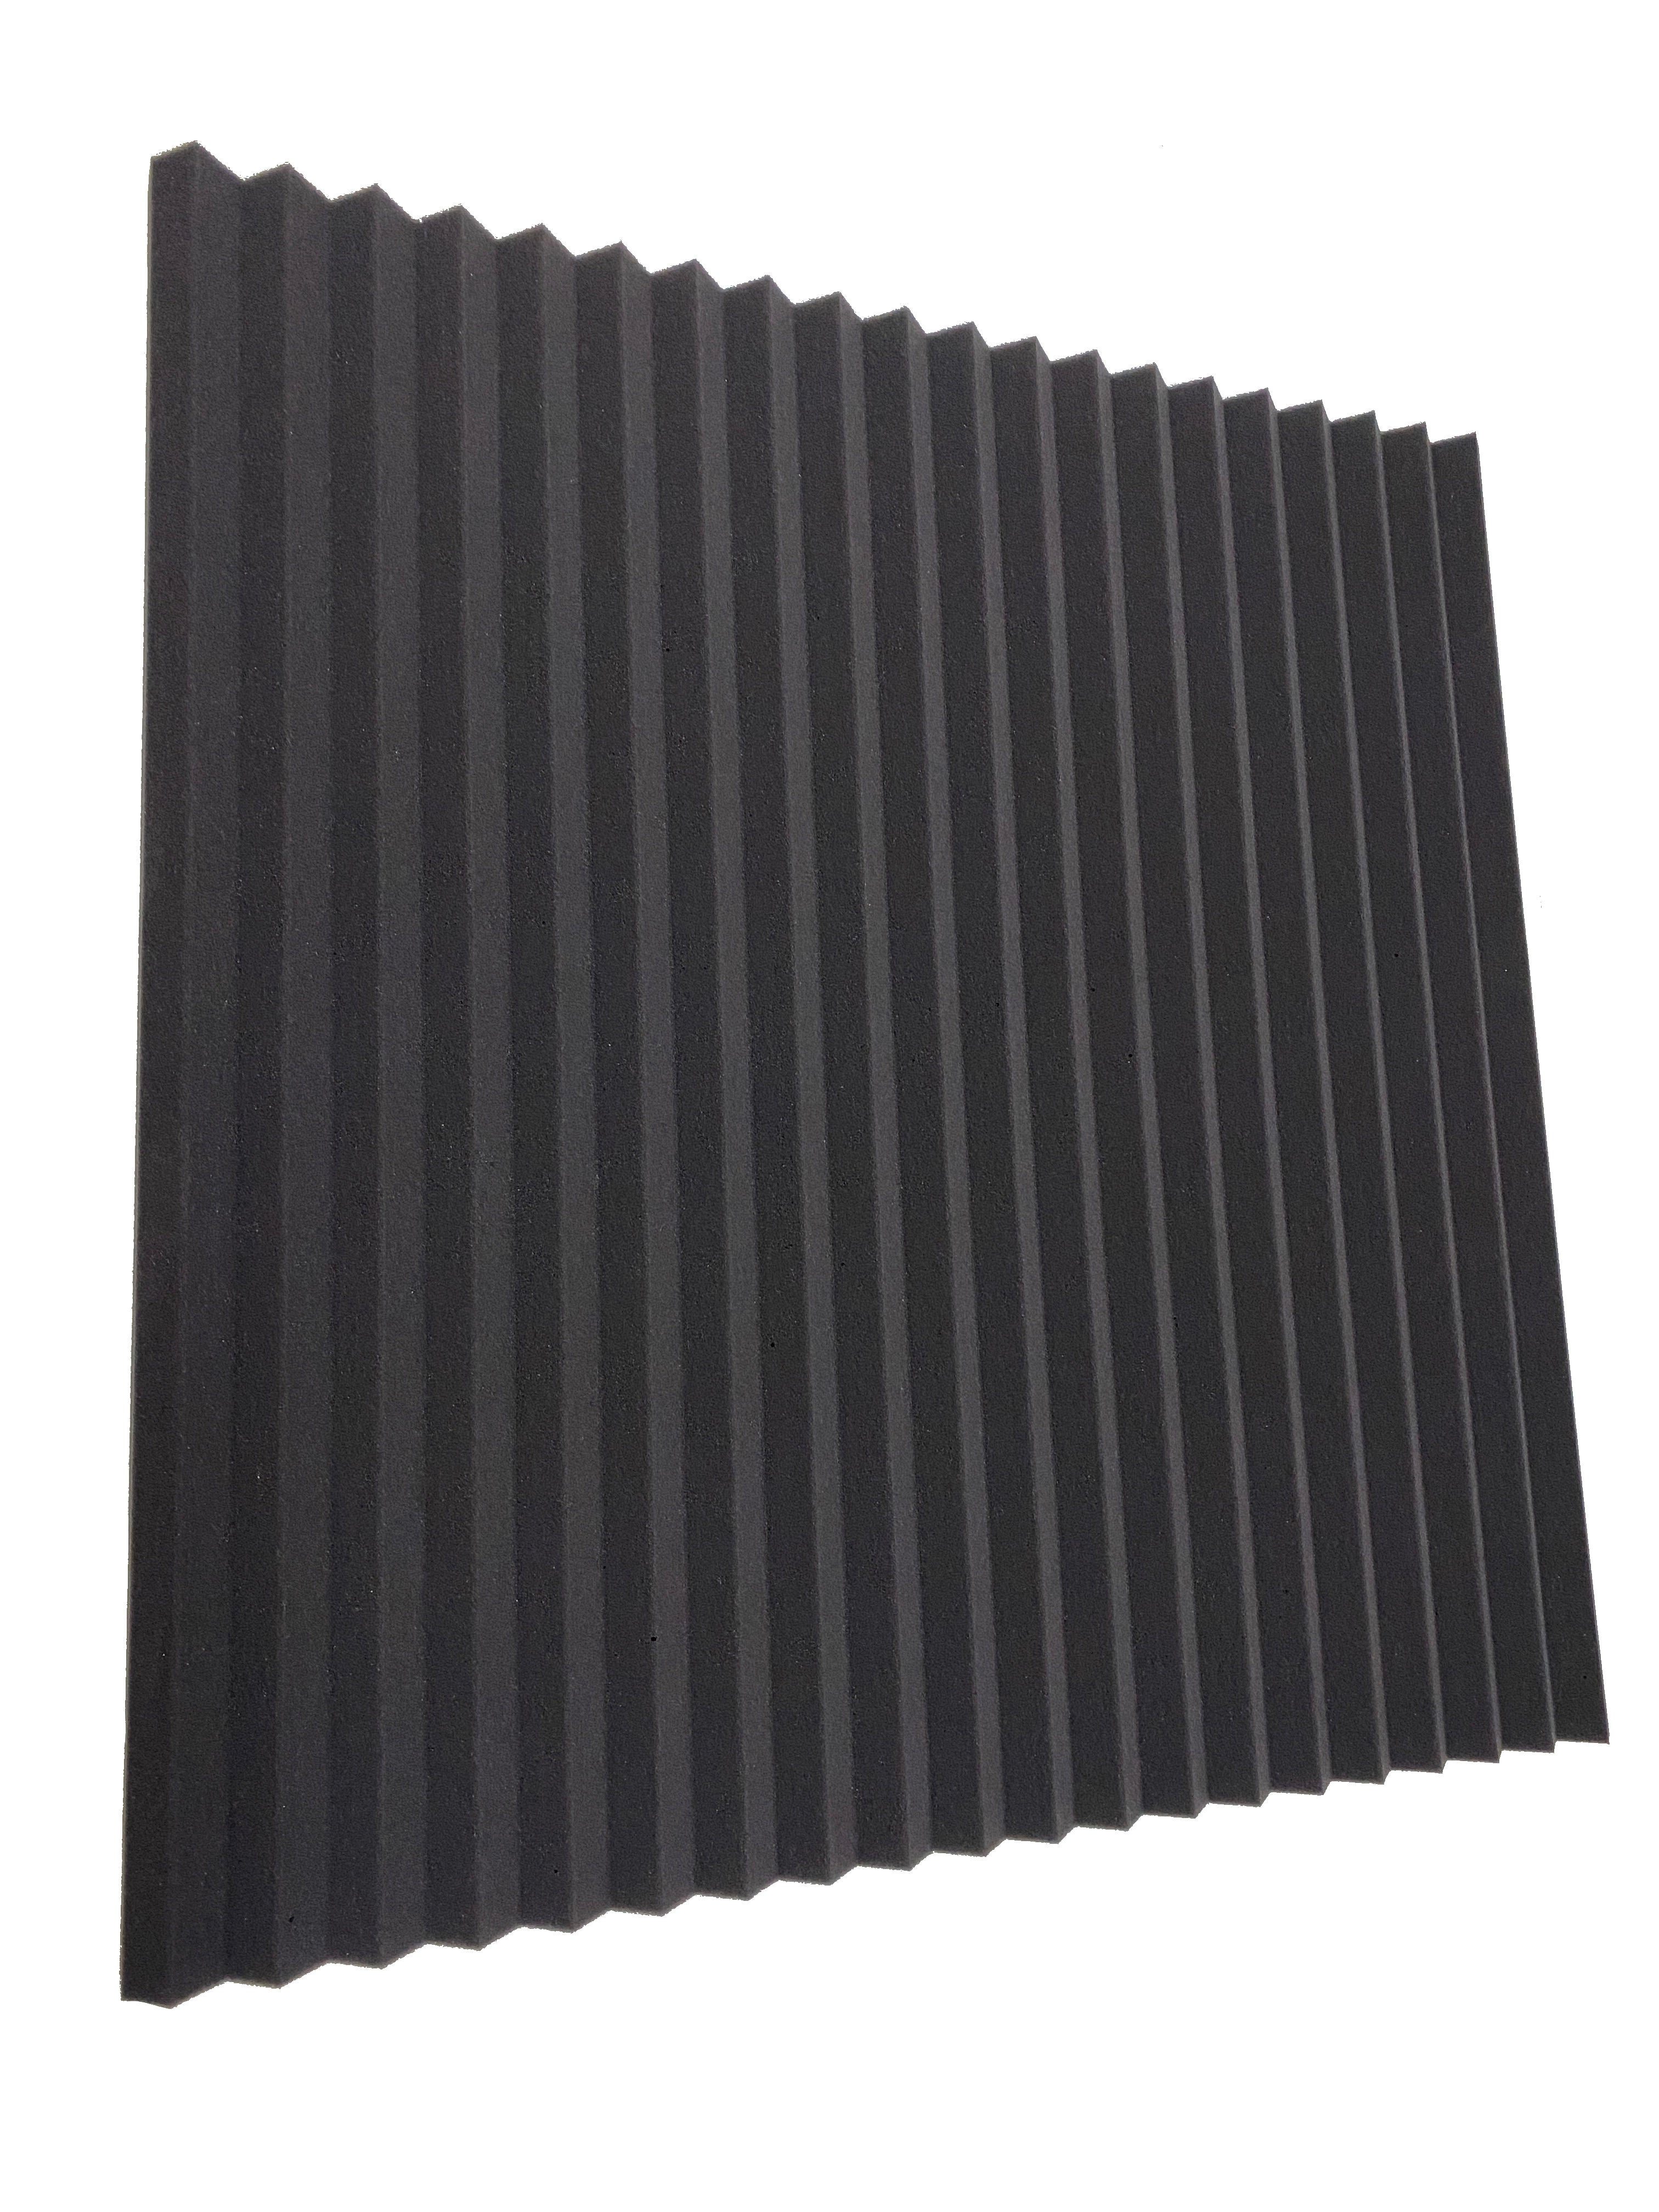 Buy dark-grey Wedge 30&quot; Acoustic Studio Foam Tile Pack